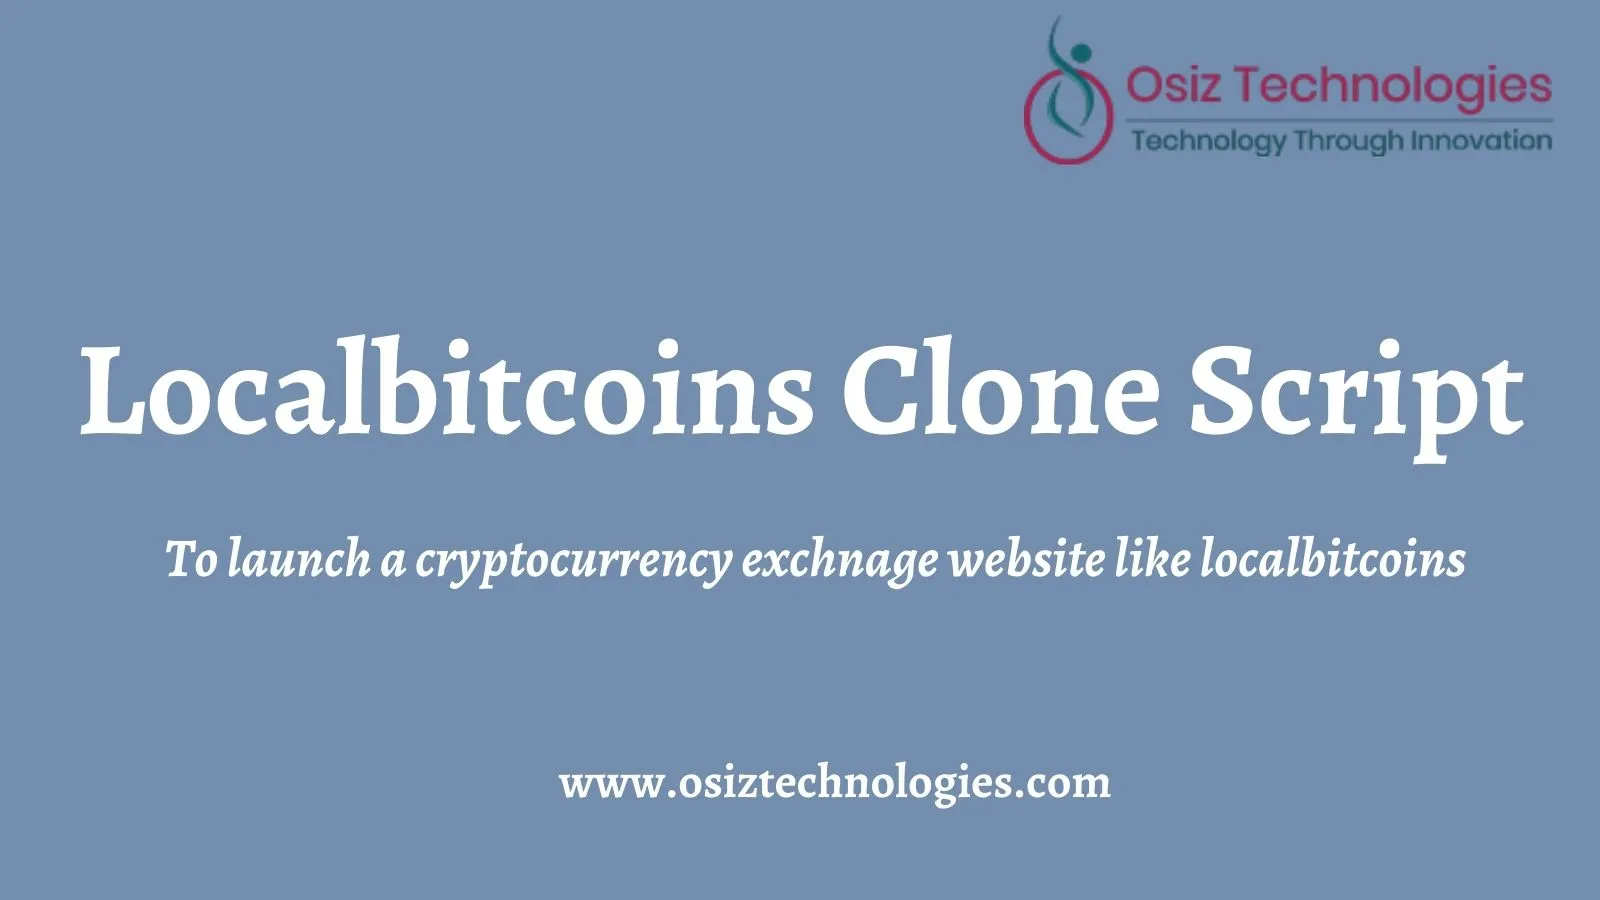 What is localbitcoins clone script?